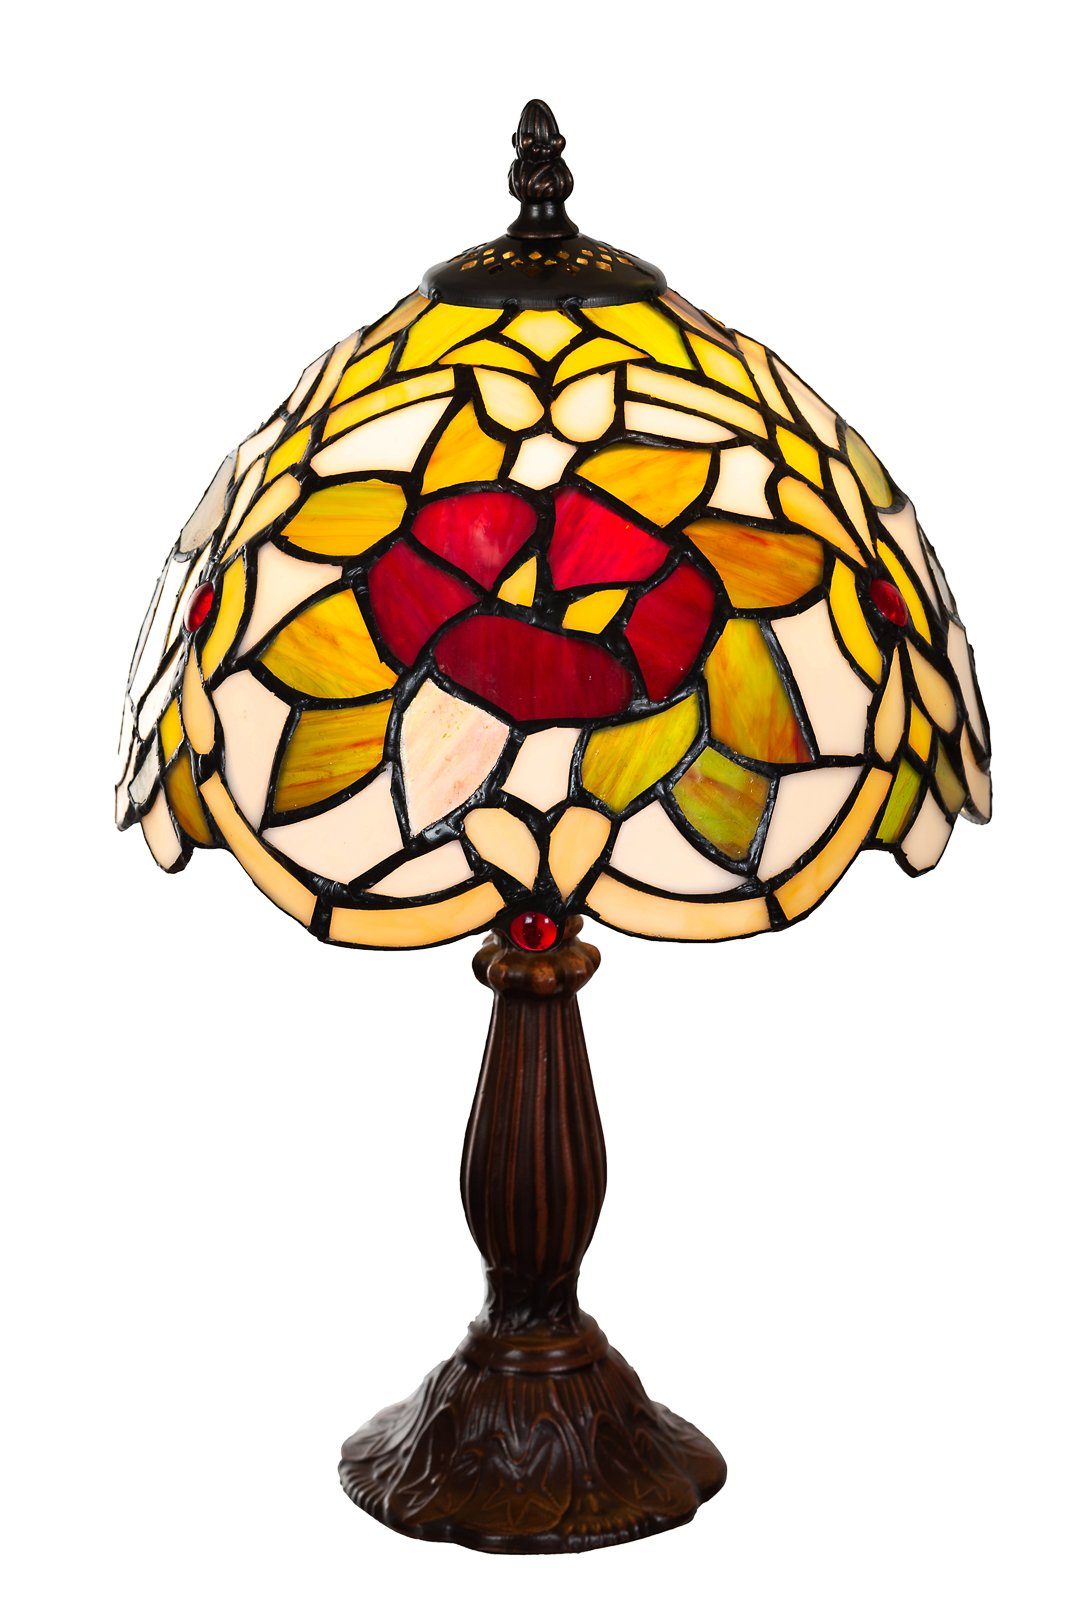 Motiv Blume Tischlampe Lampe Tiffany Style Stehlampe Tiff148 BIRENDY Dekorationslampe